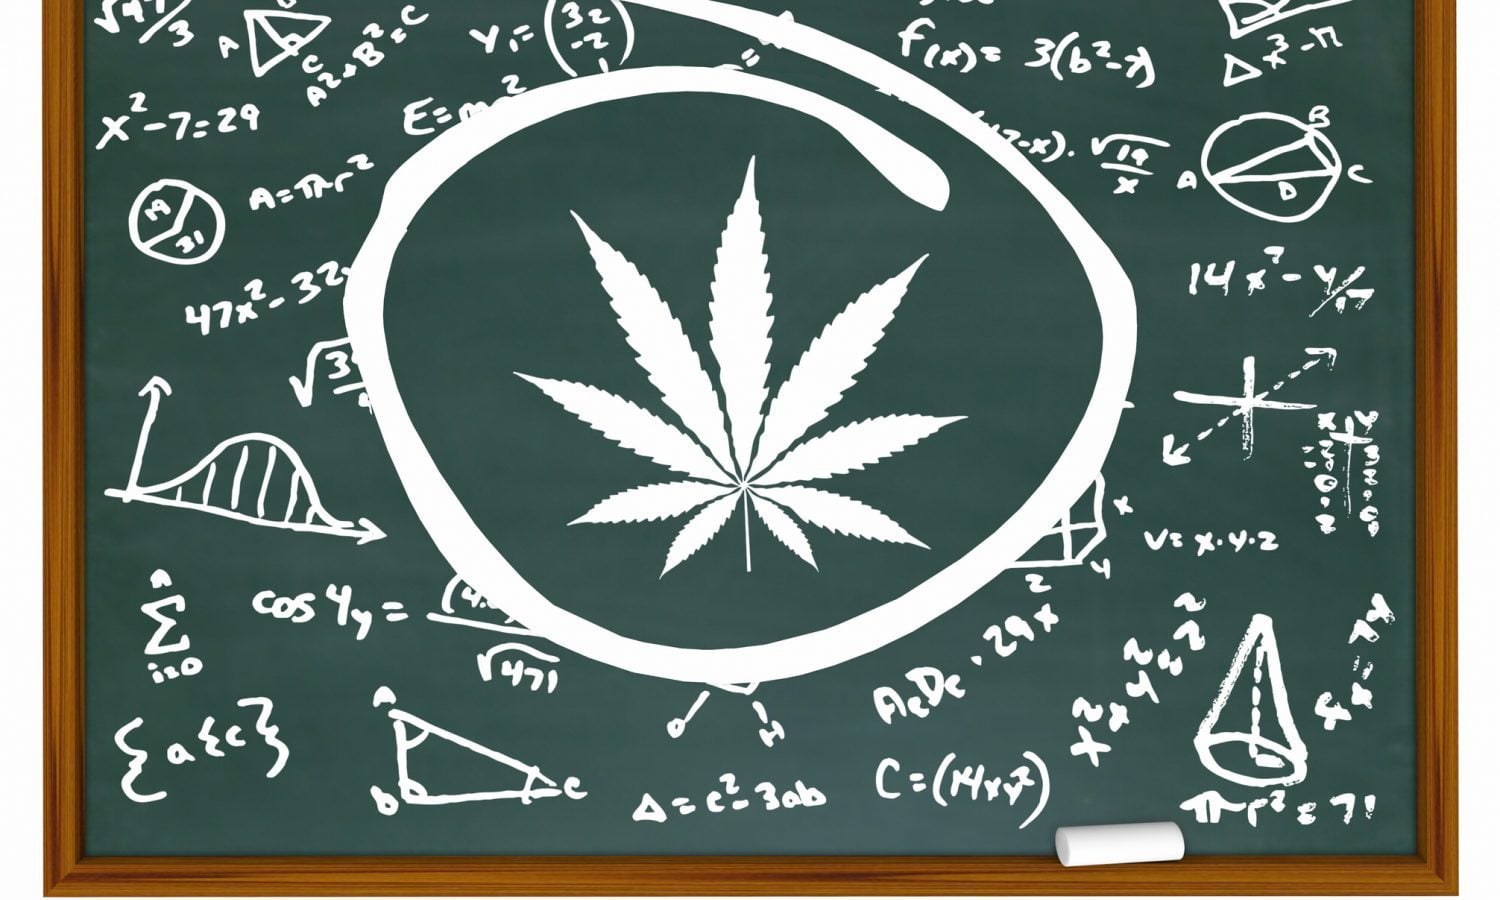 cannabis education